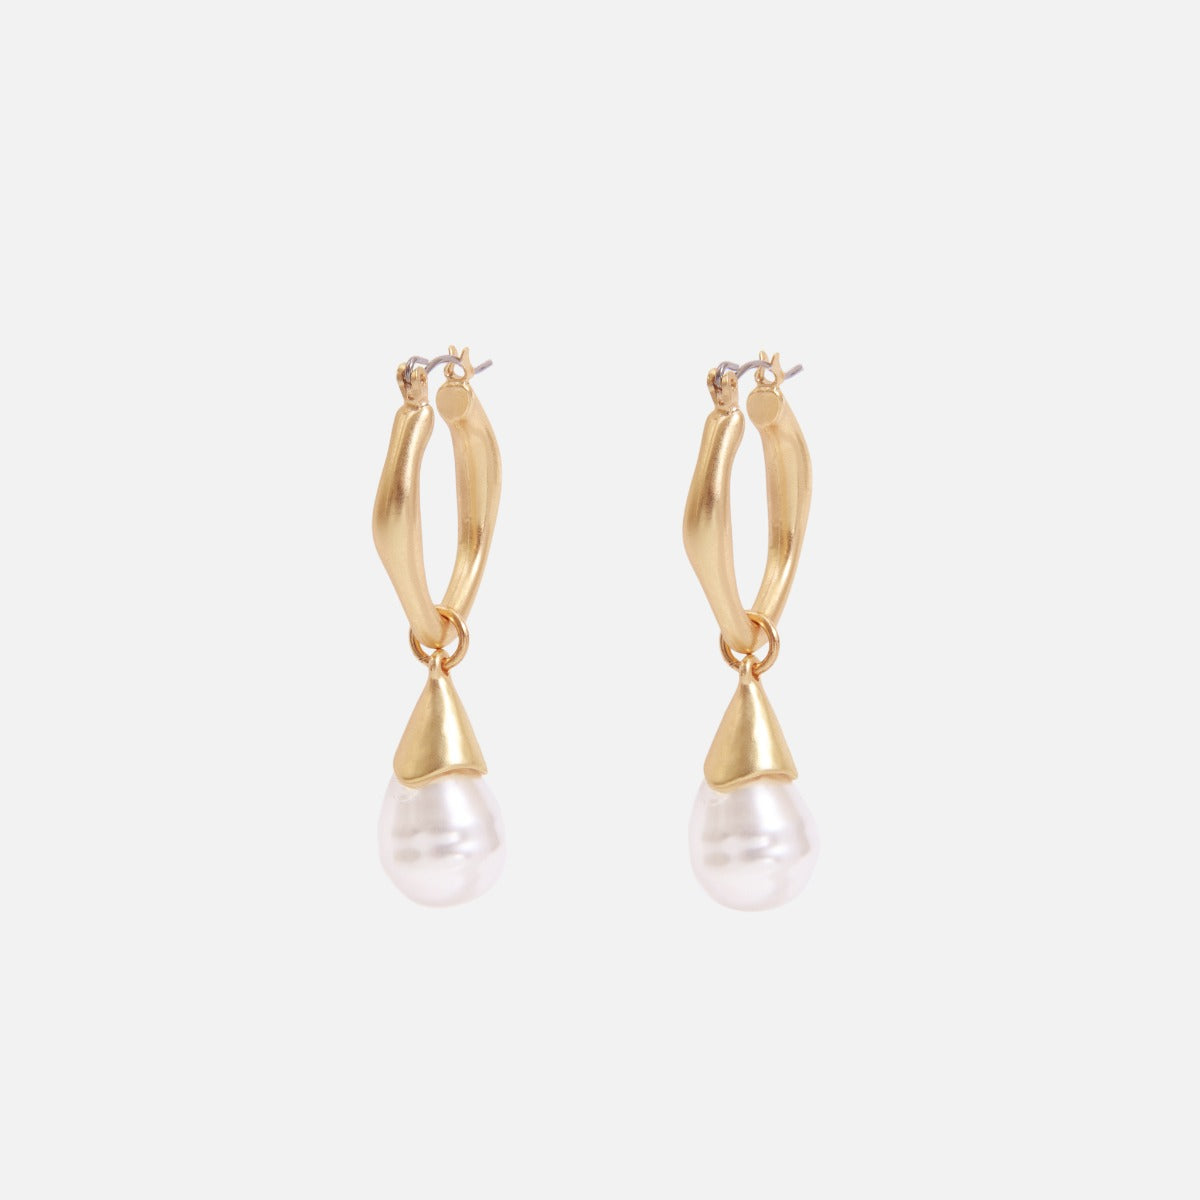 Golden hoops earrings with drop-shaped pearl